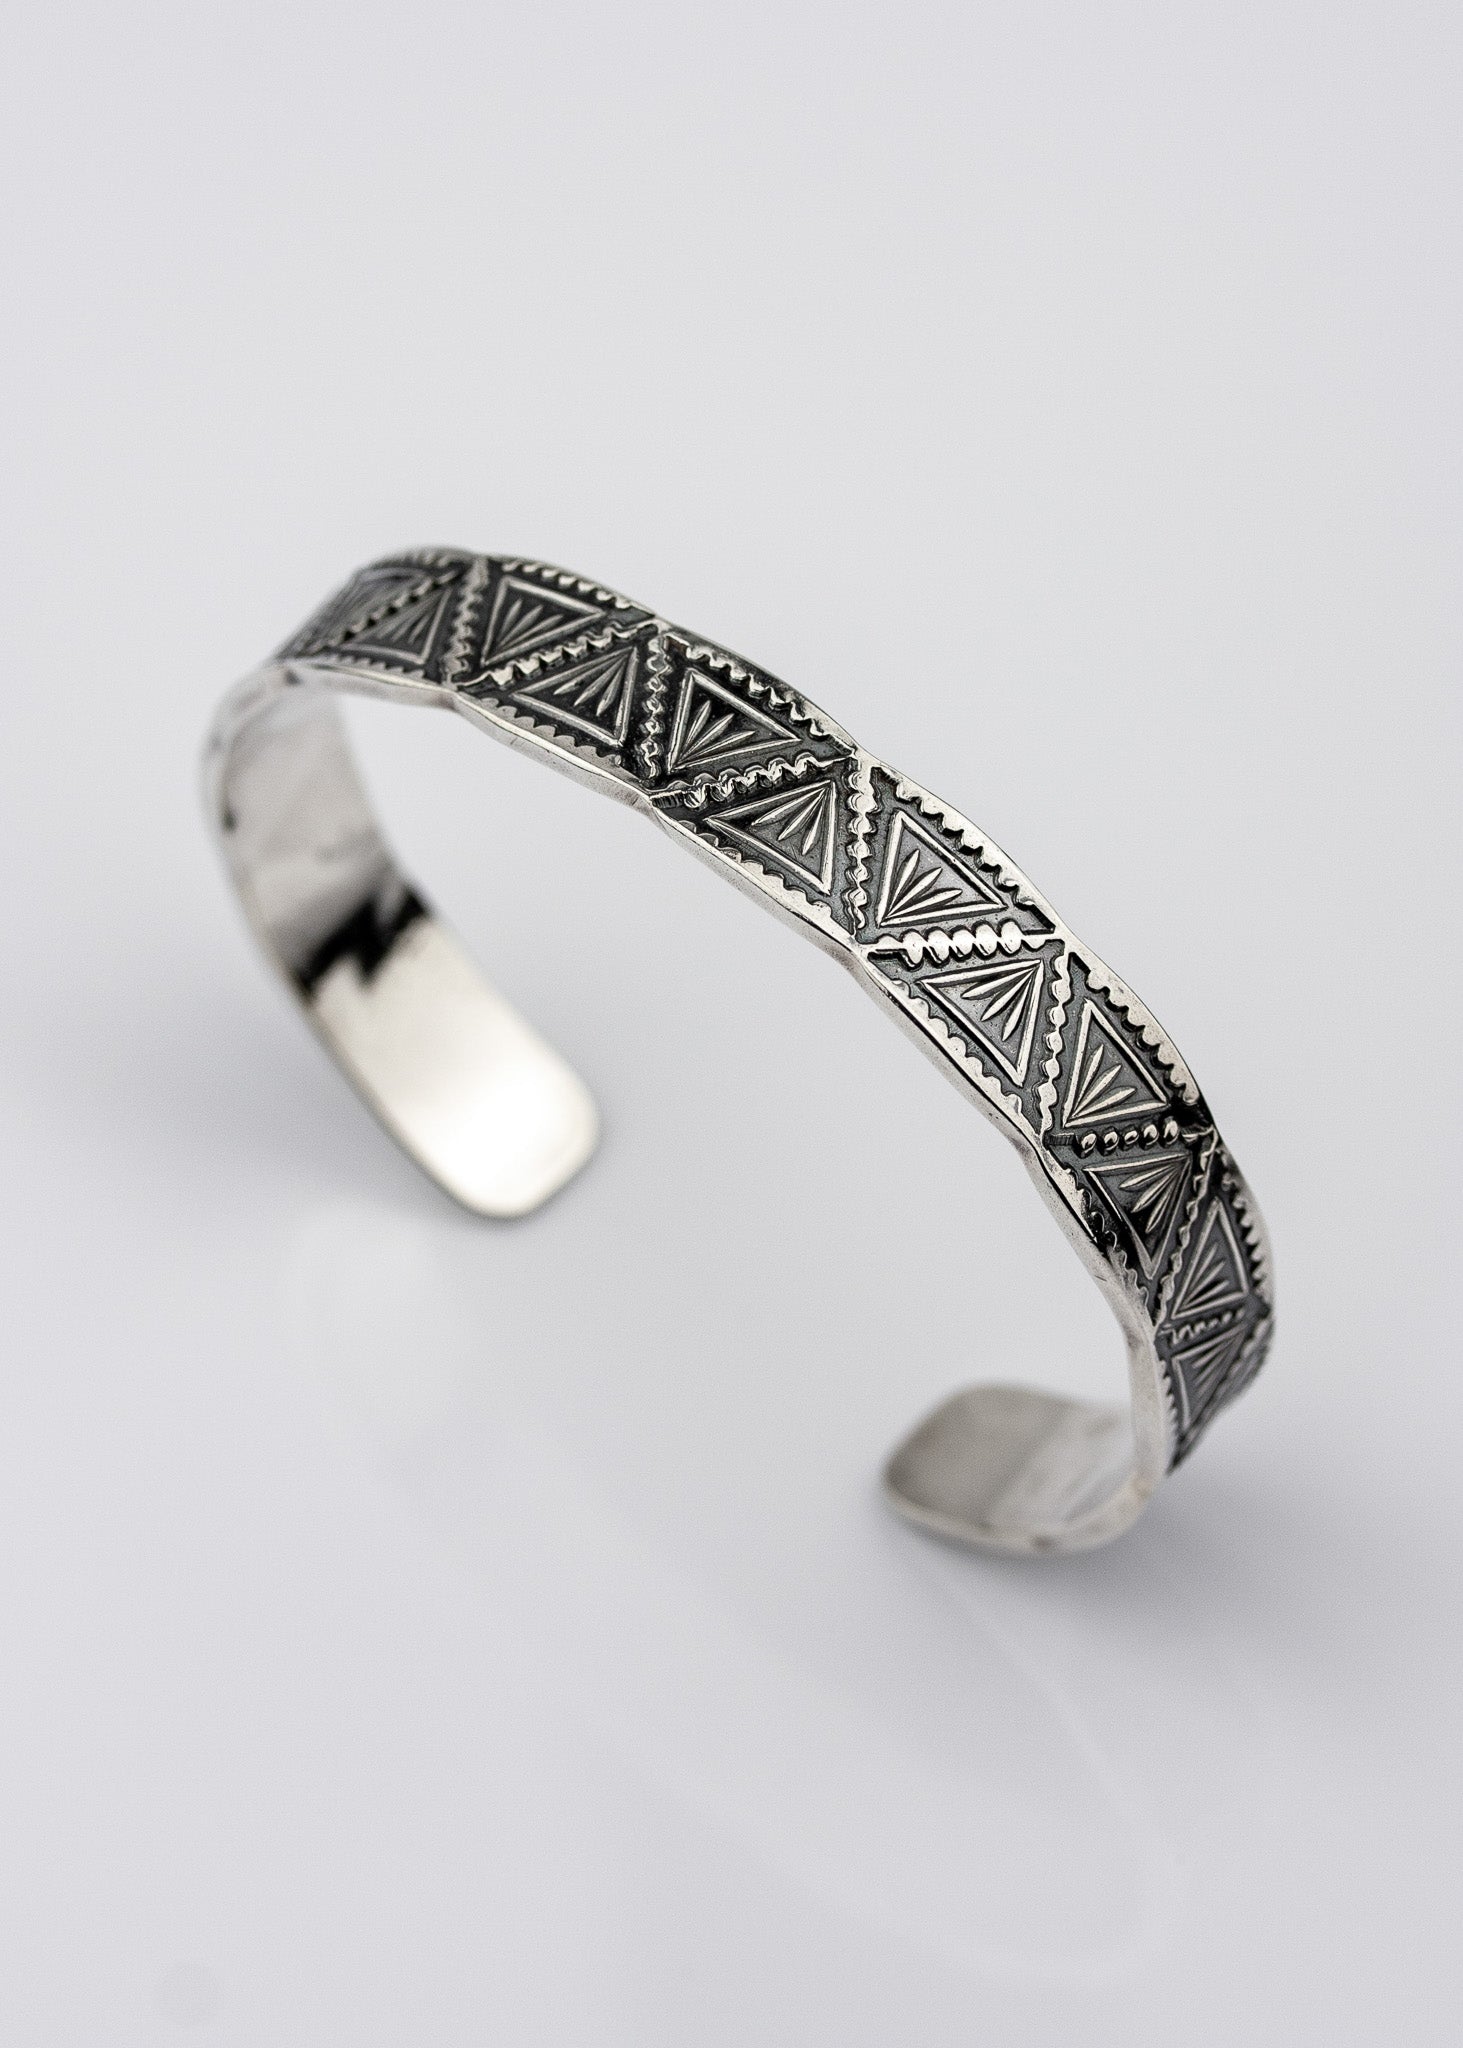 V Cuff Bracelet in Silver